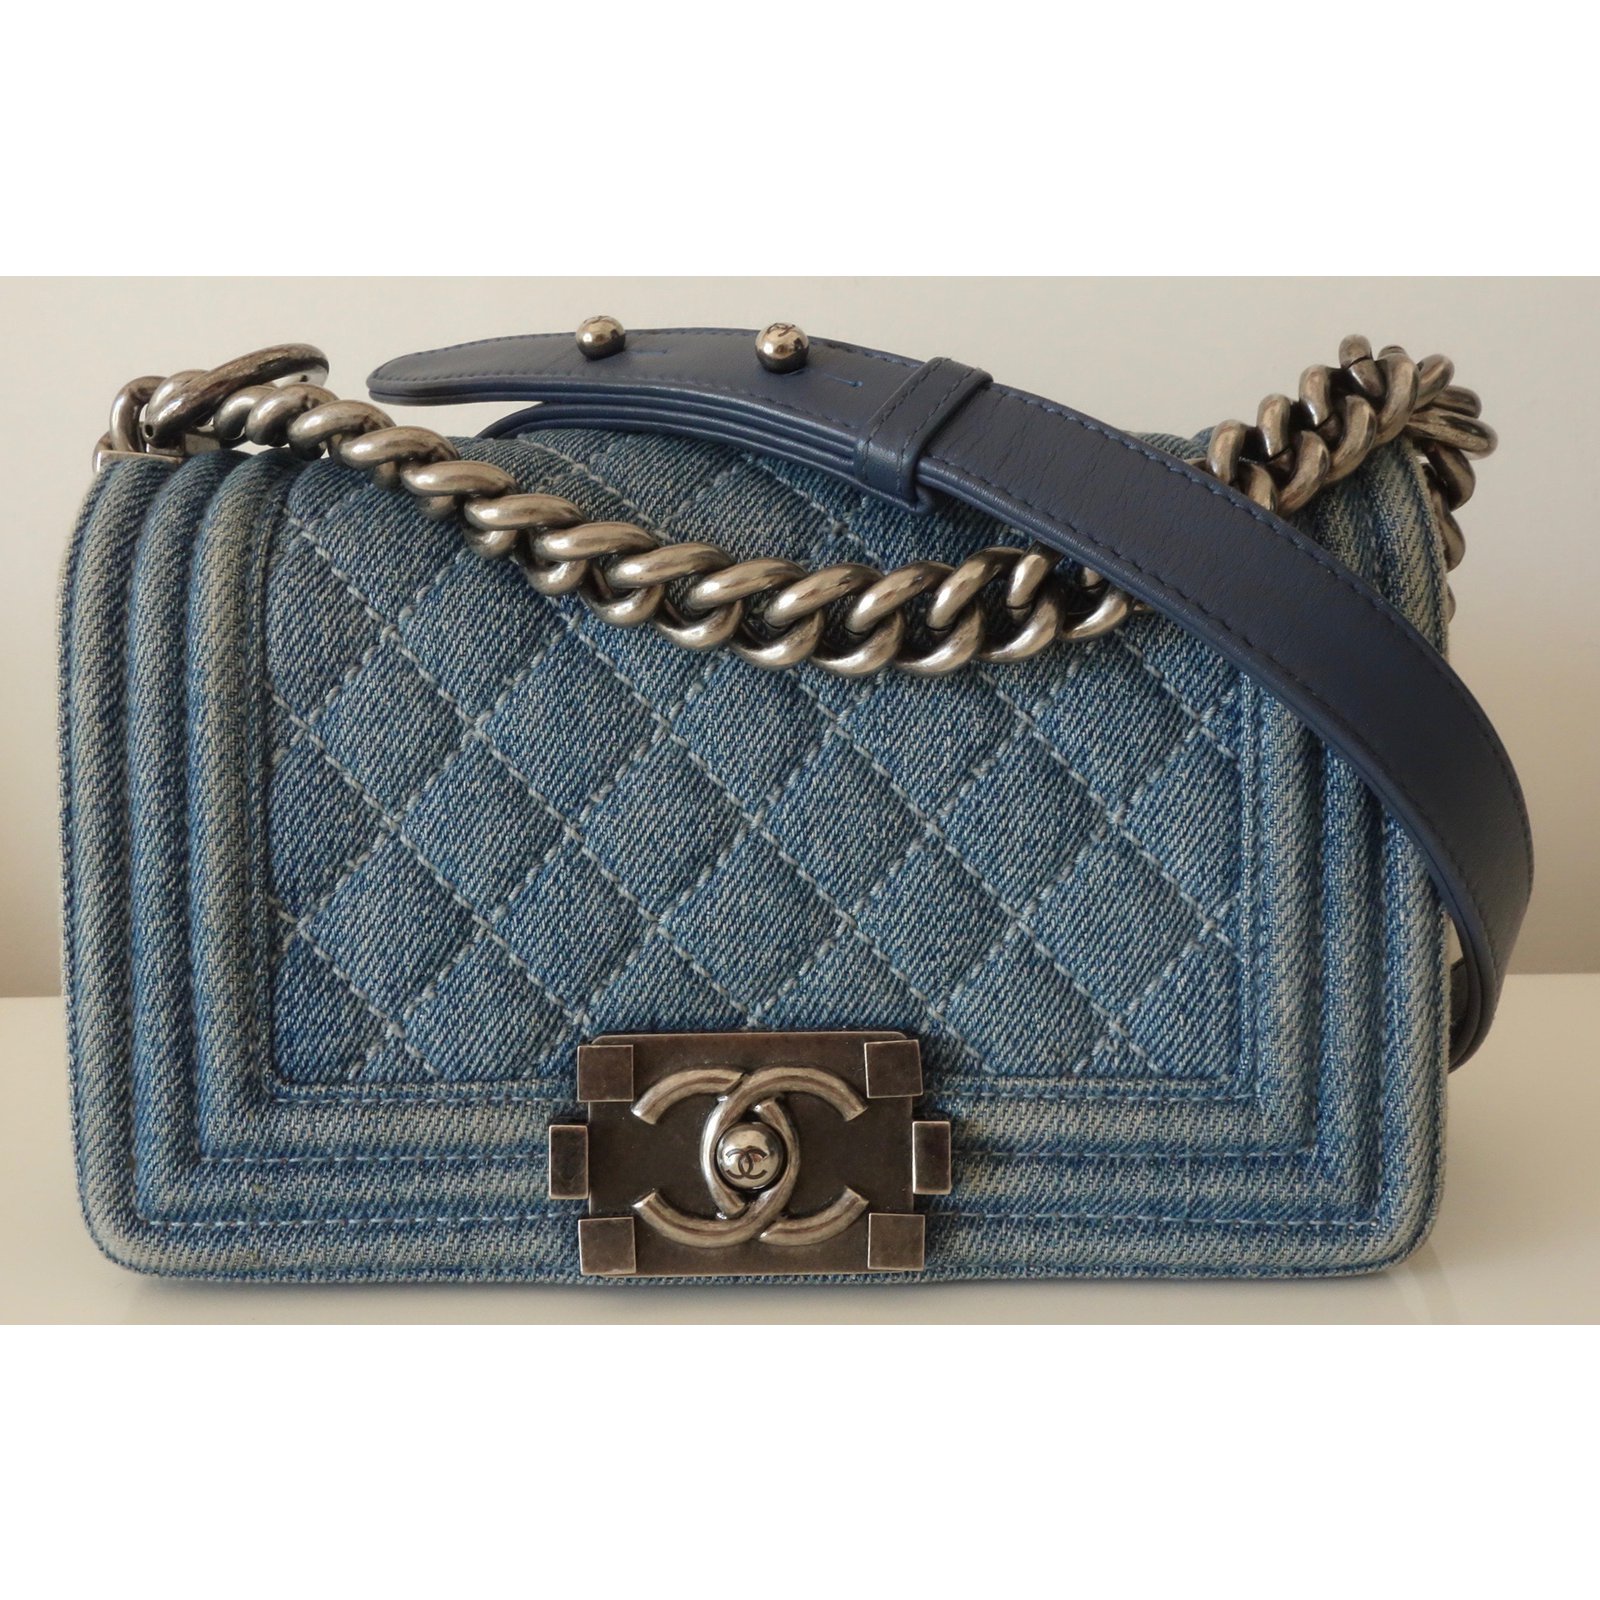 Sold at Auction Chanel  Denim Chevron Boy Medium Flap Crossbody Bag   Blue CC Chain